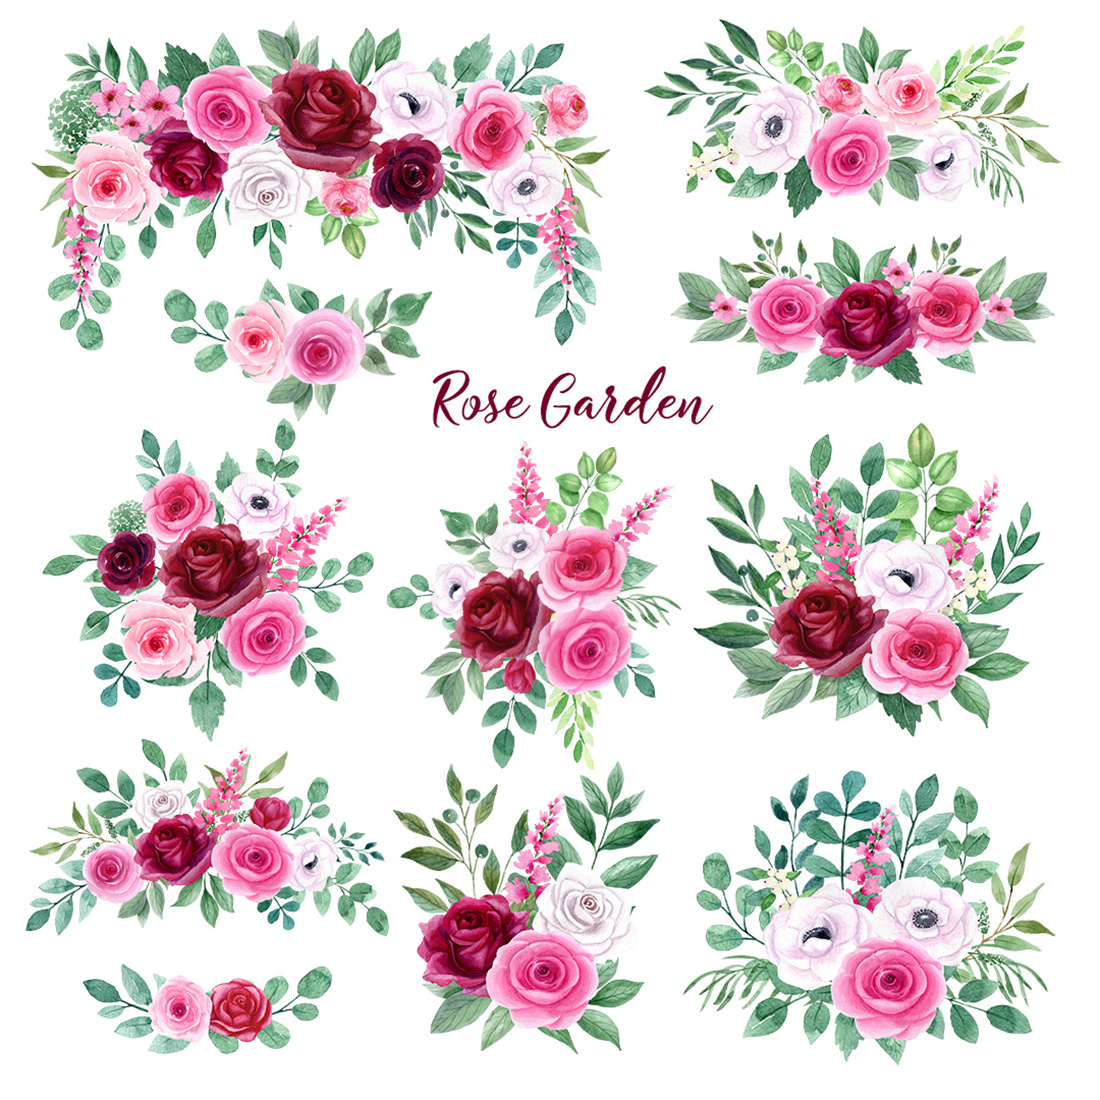 Rose Garden - Set of Watercolor Flowers bouquets.